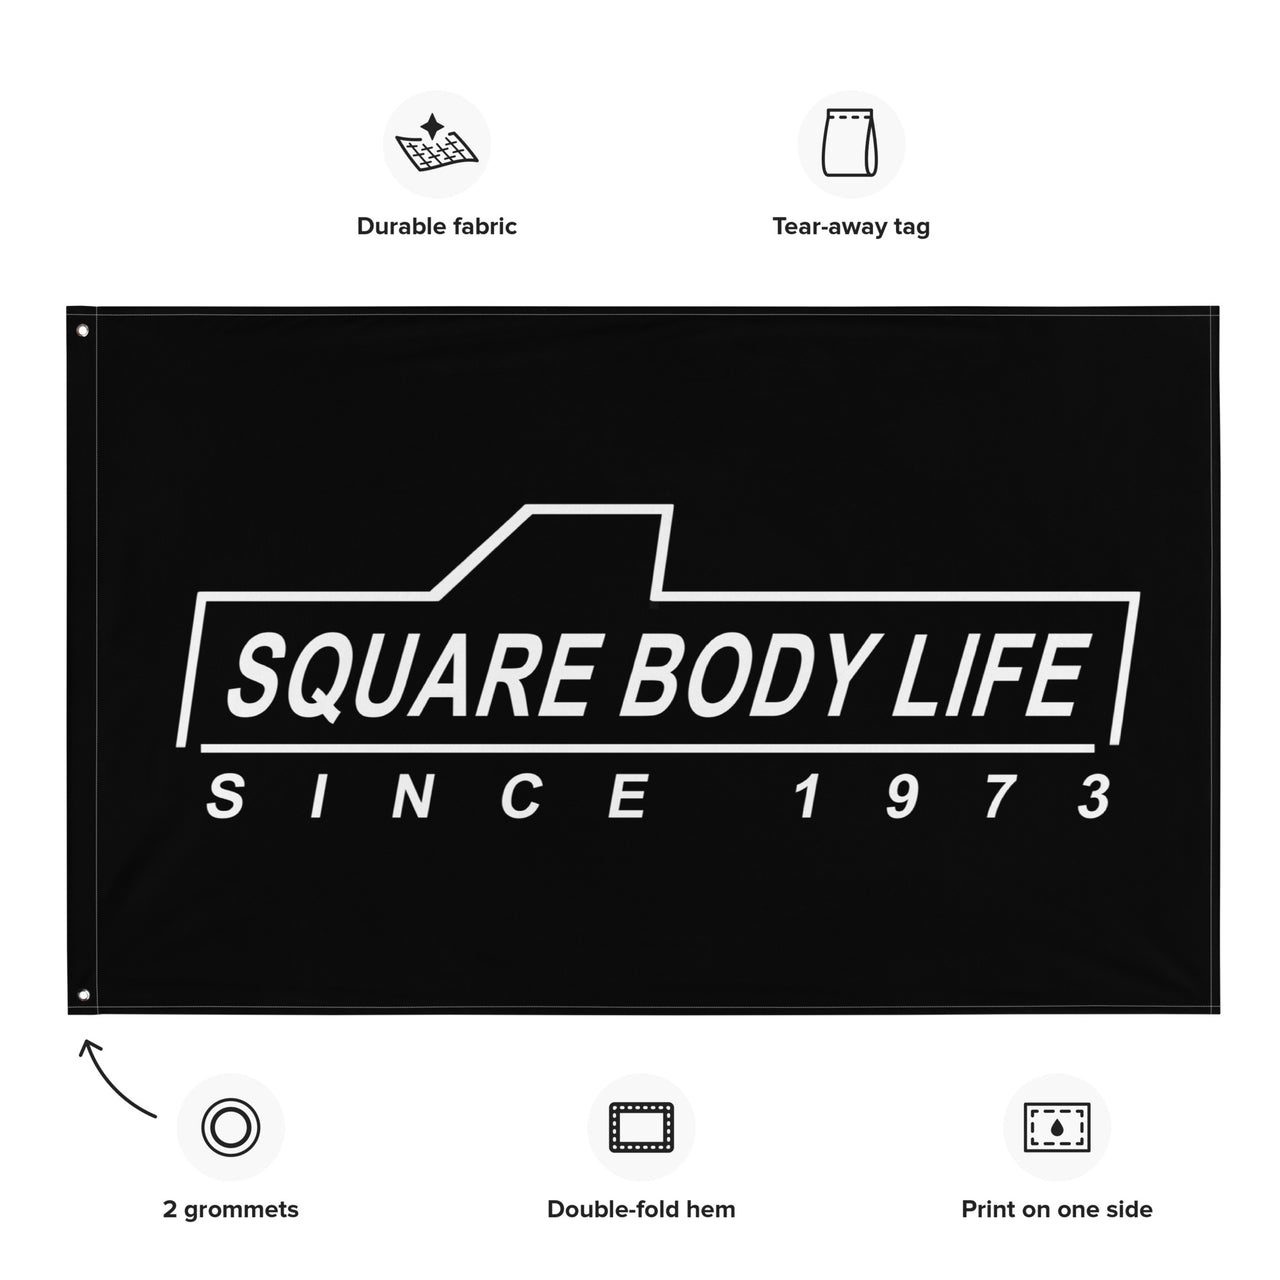 Squarebody Flag - Square Body Life details